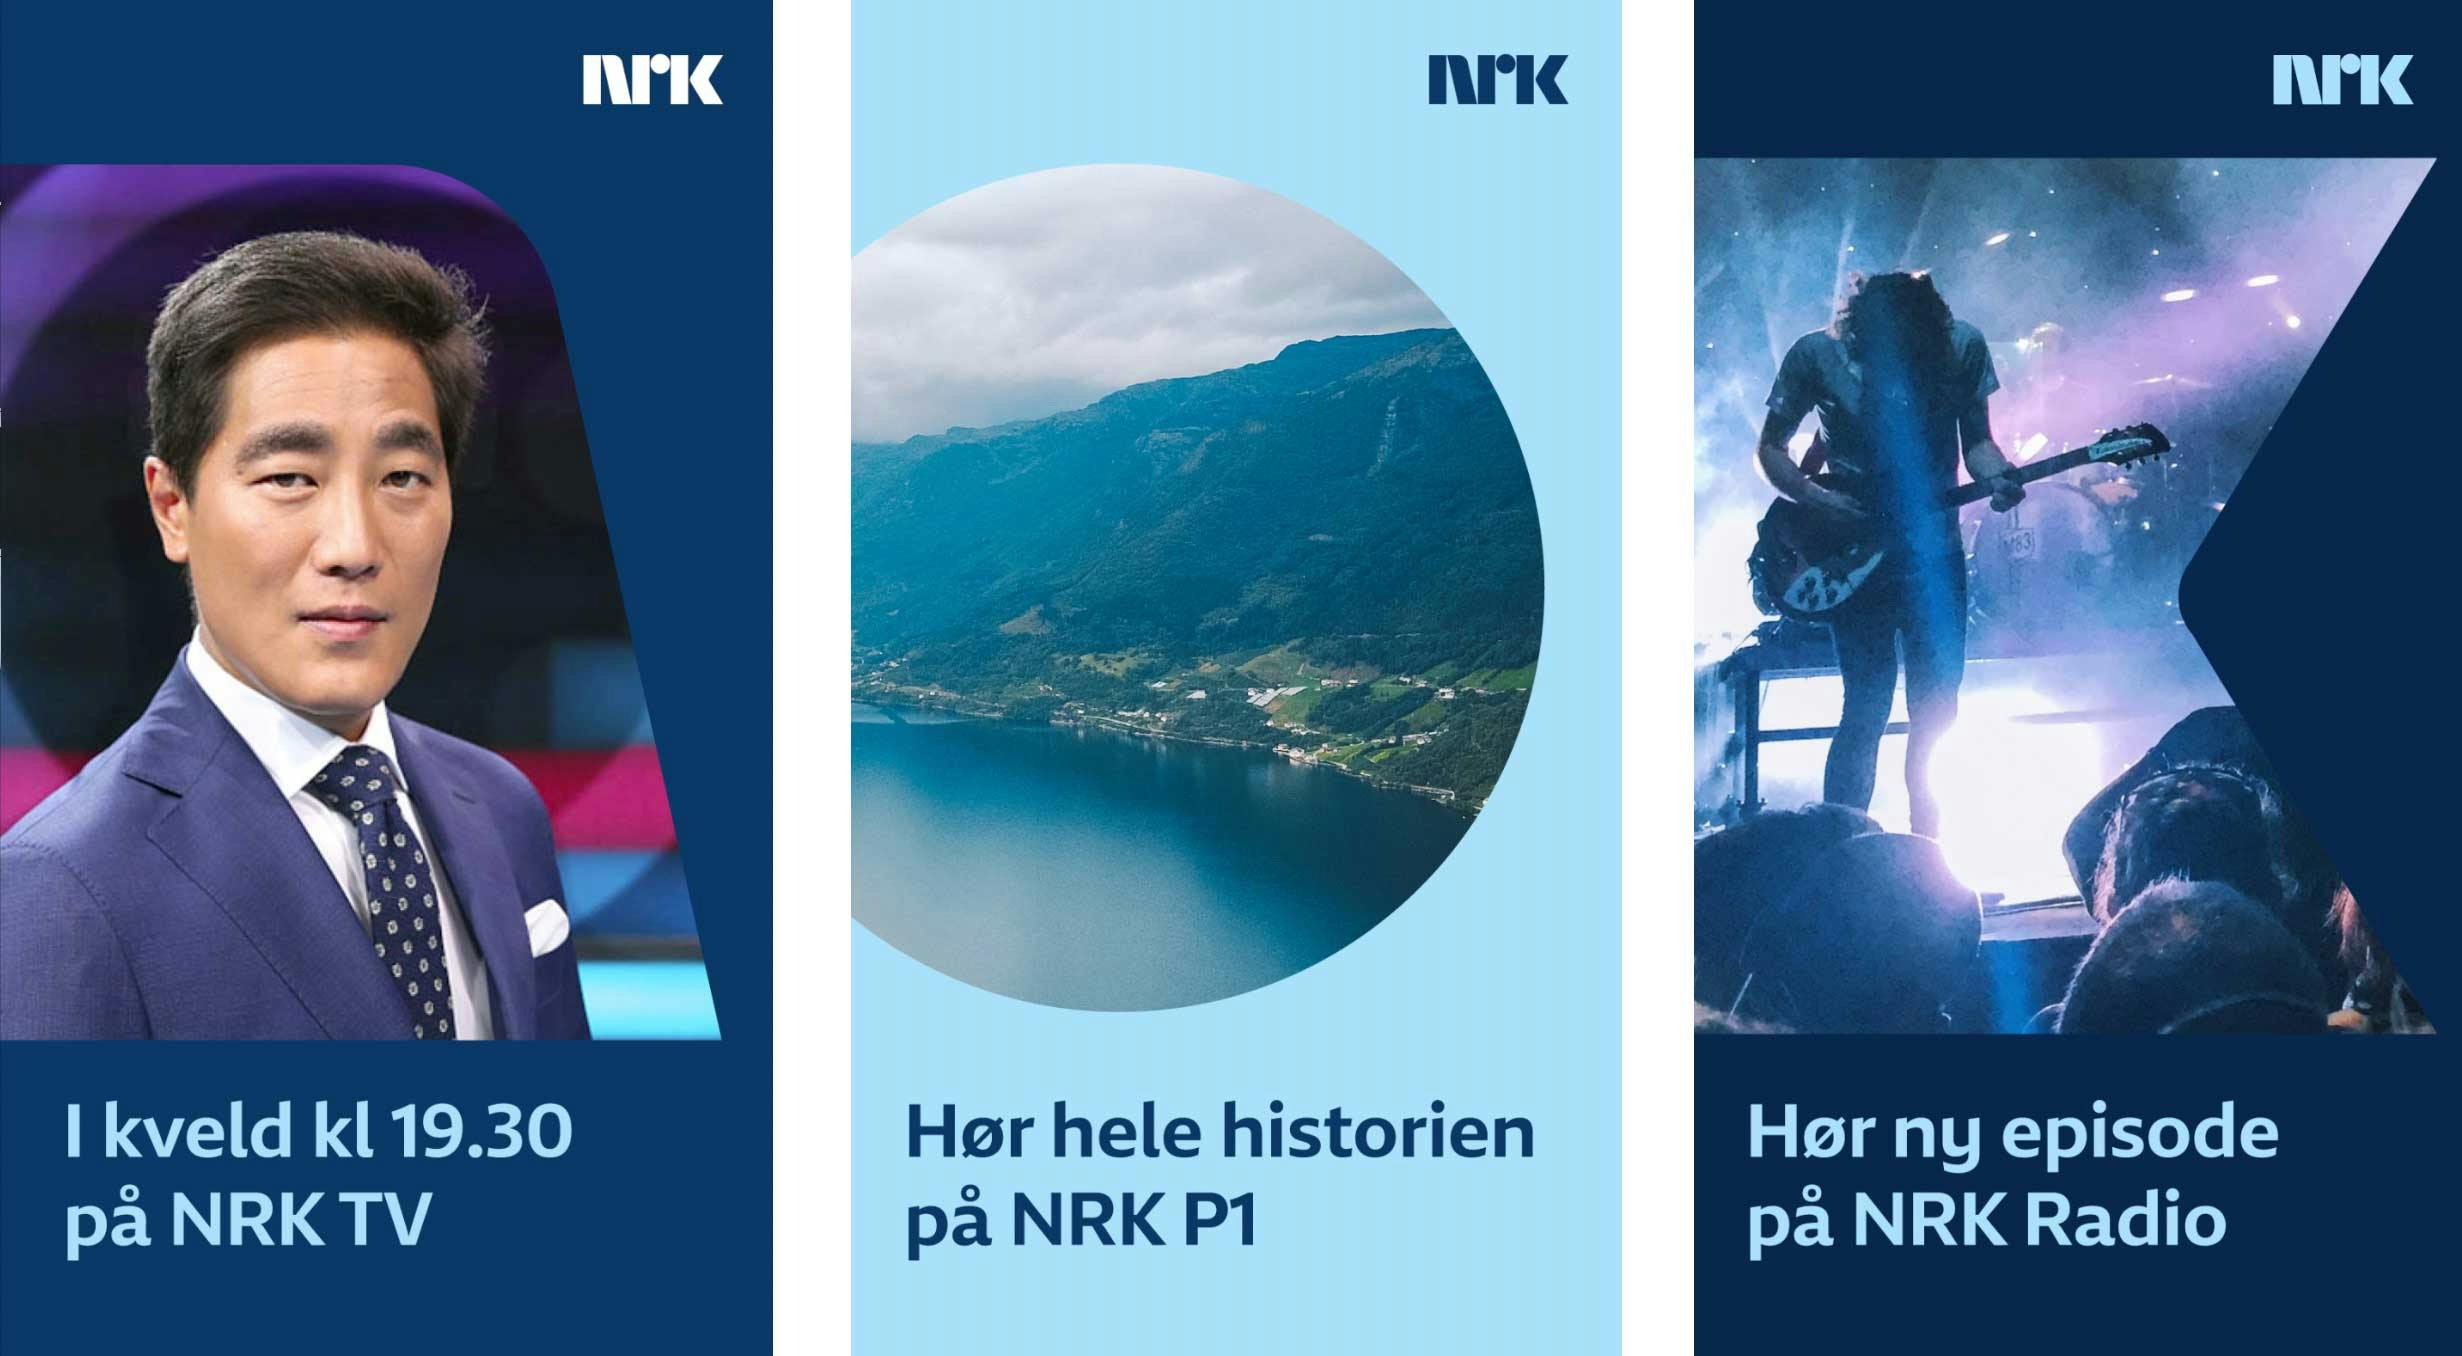 NRK screens